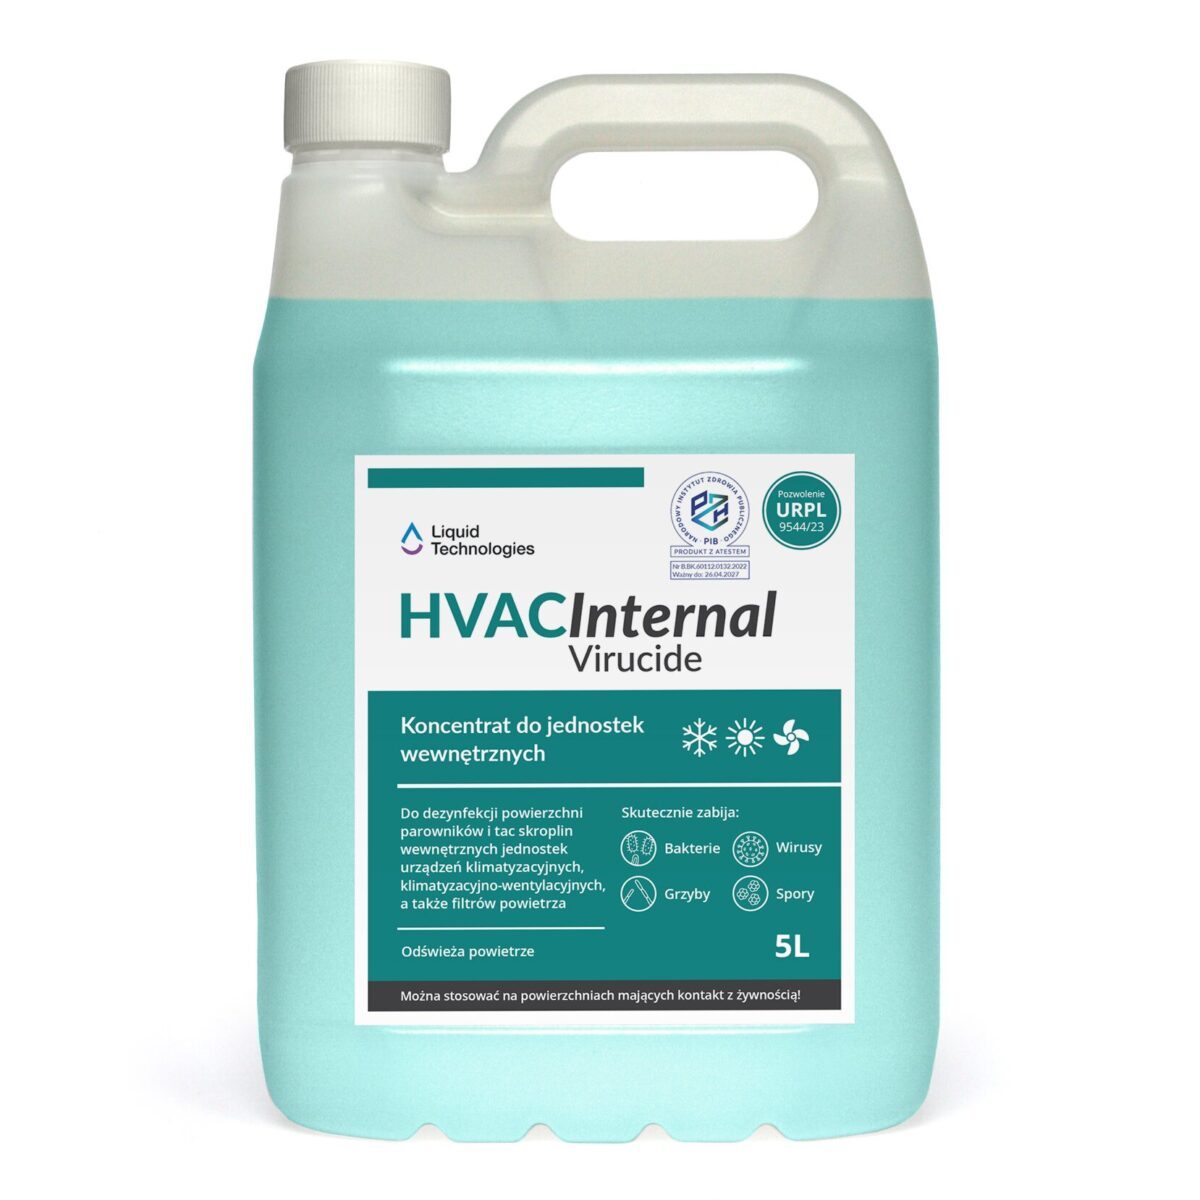 Środek do dezynfekcji klimatyzacji koncentrat 5 L - Liquid Technologies HVAC Internal Virucide